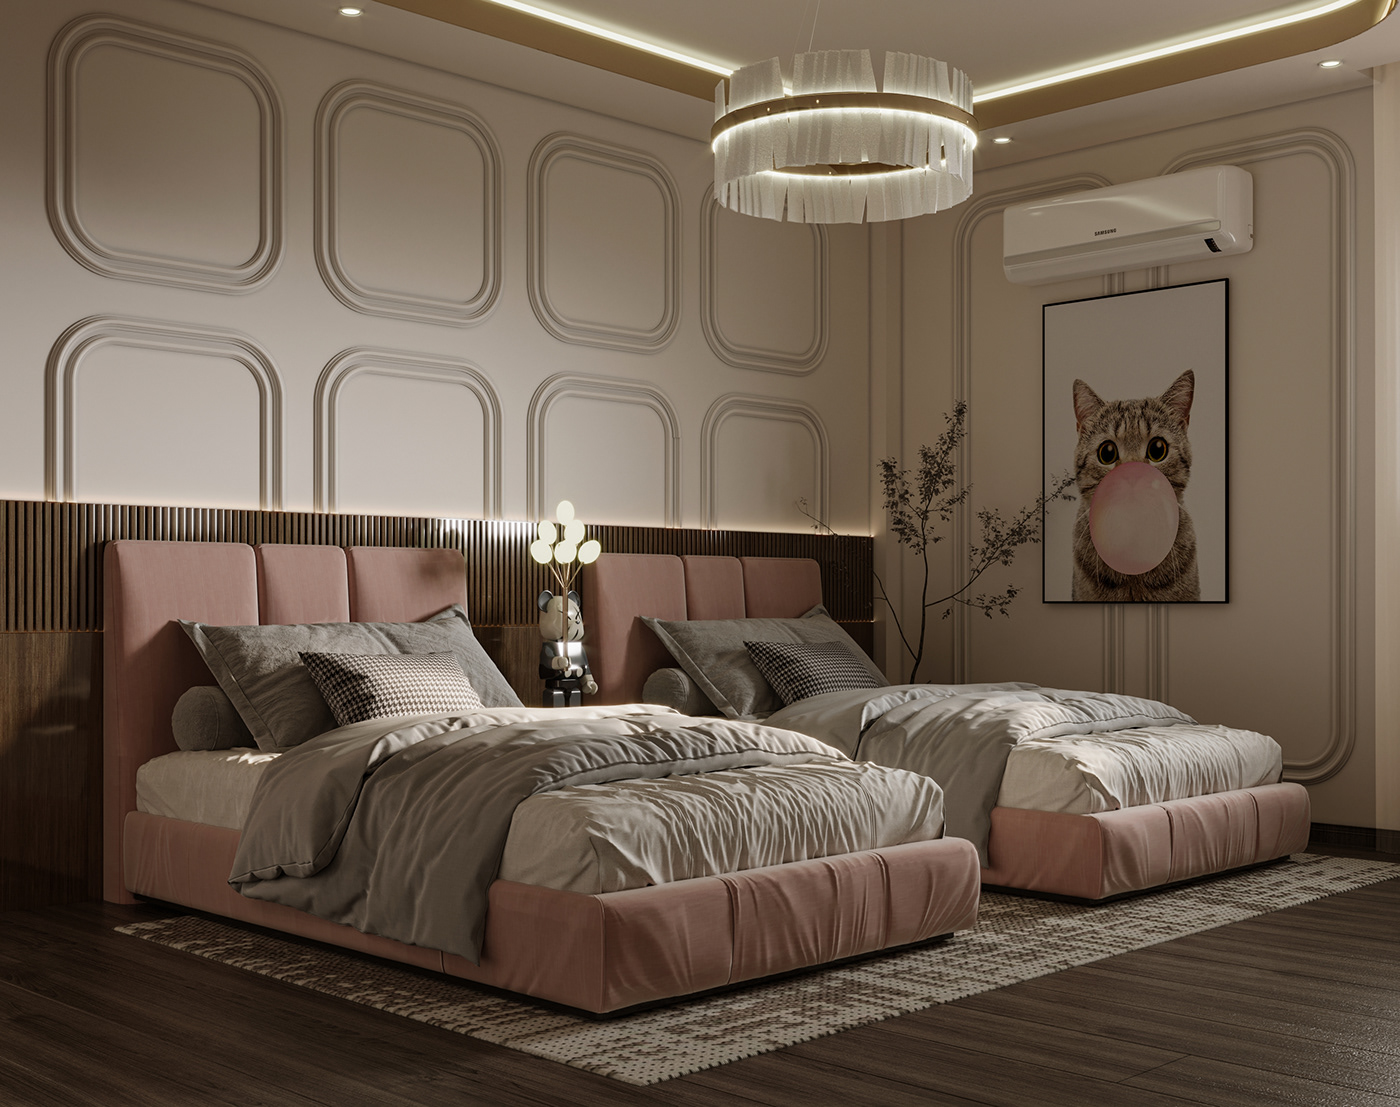 bed interior design  Render visualization 3ds max modern archviz corona architecture design